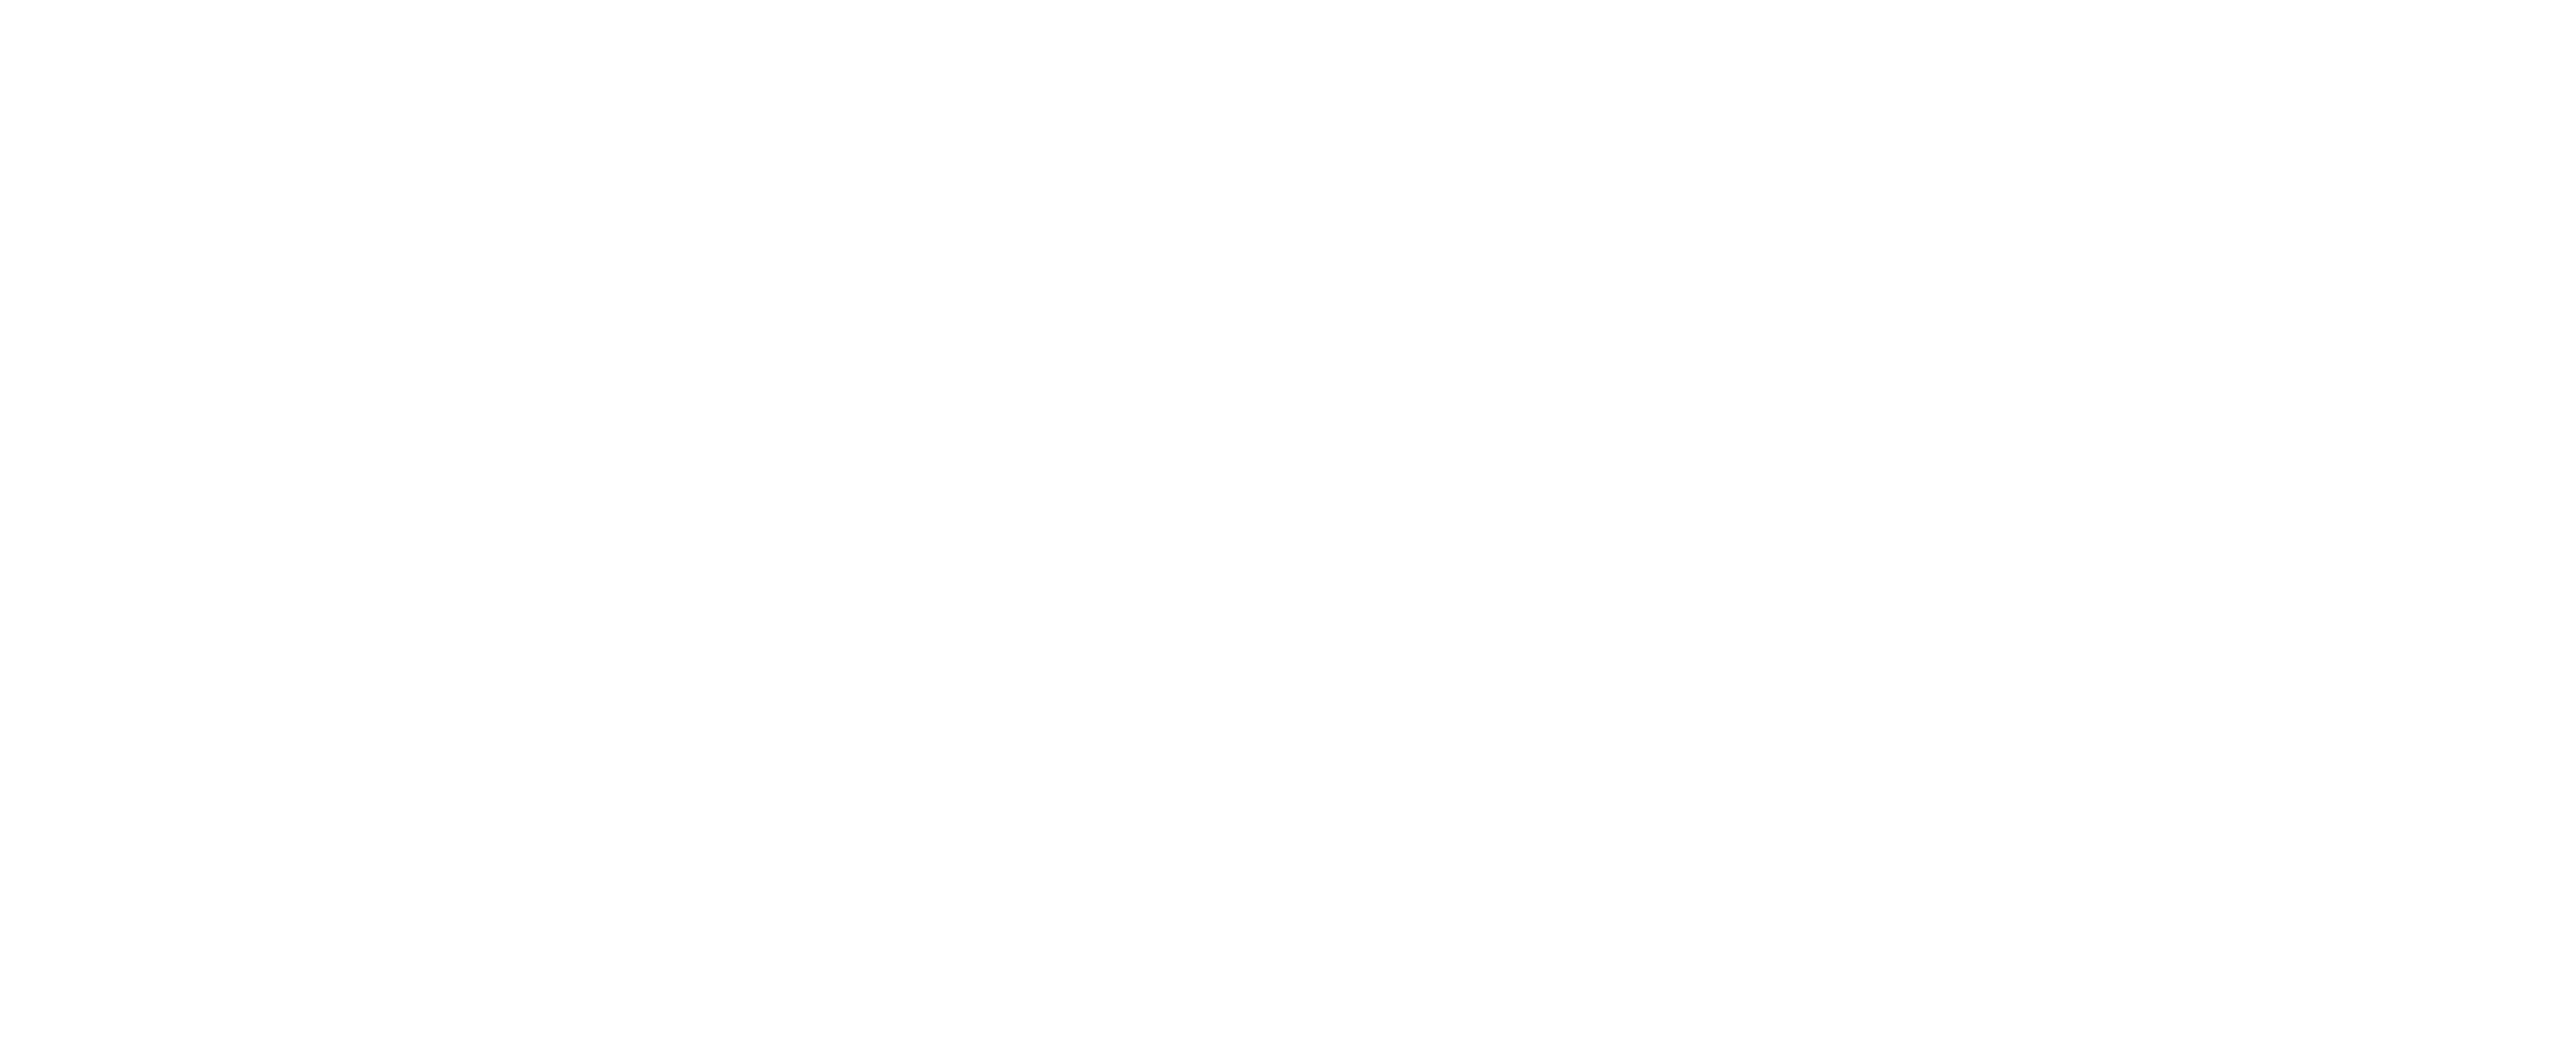 ATT white logo with transparent background